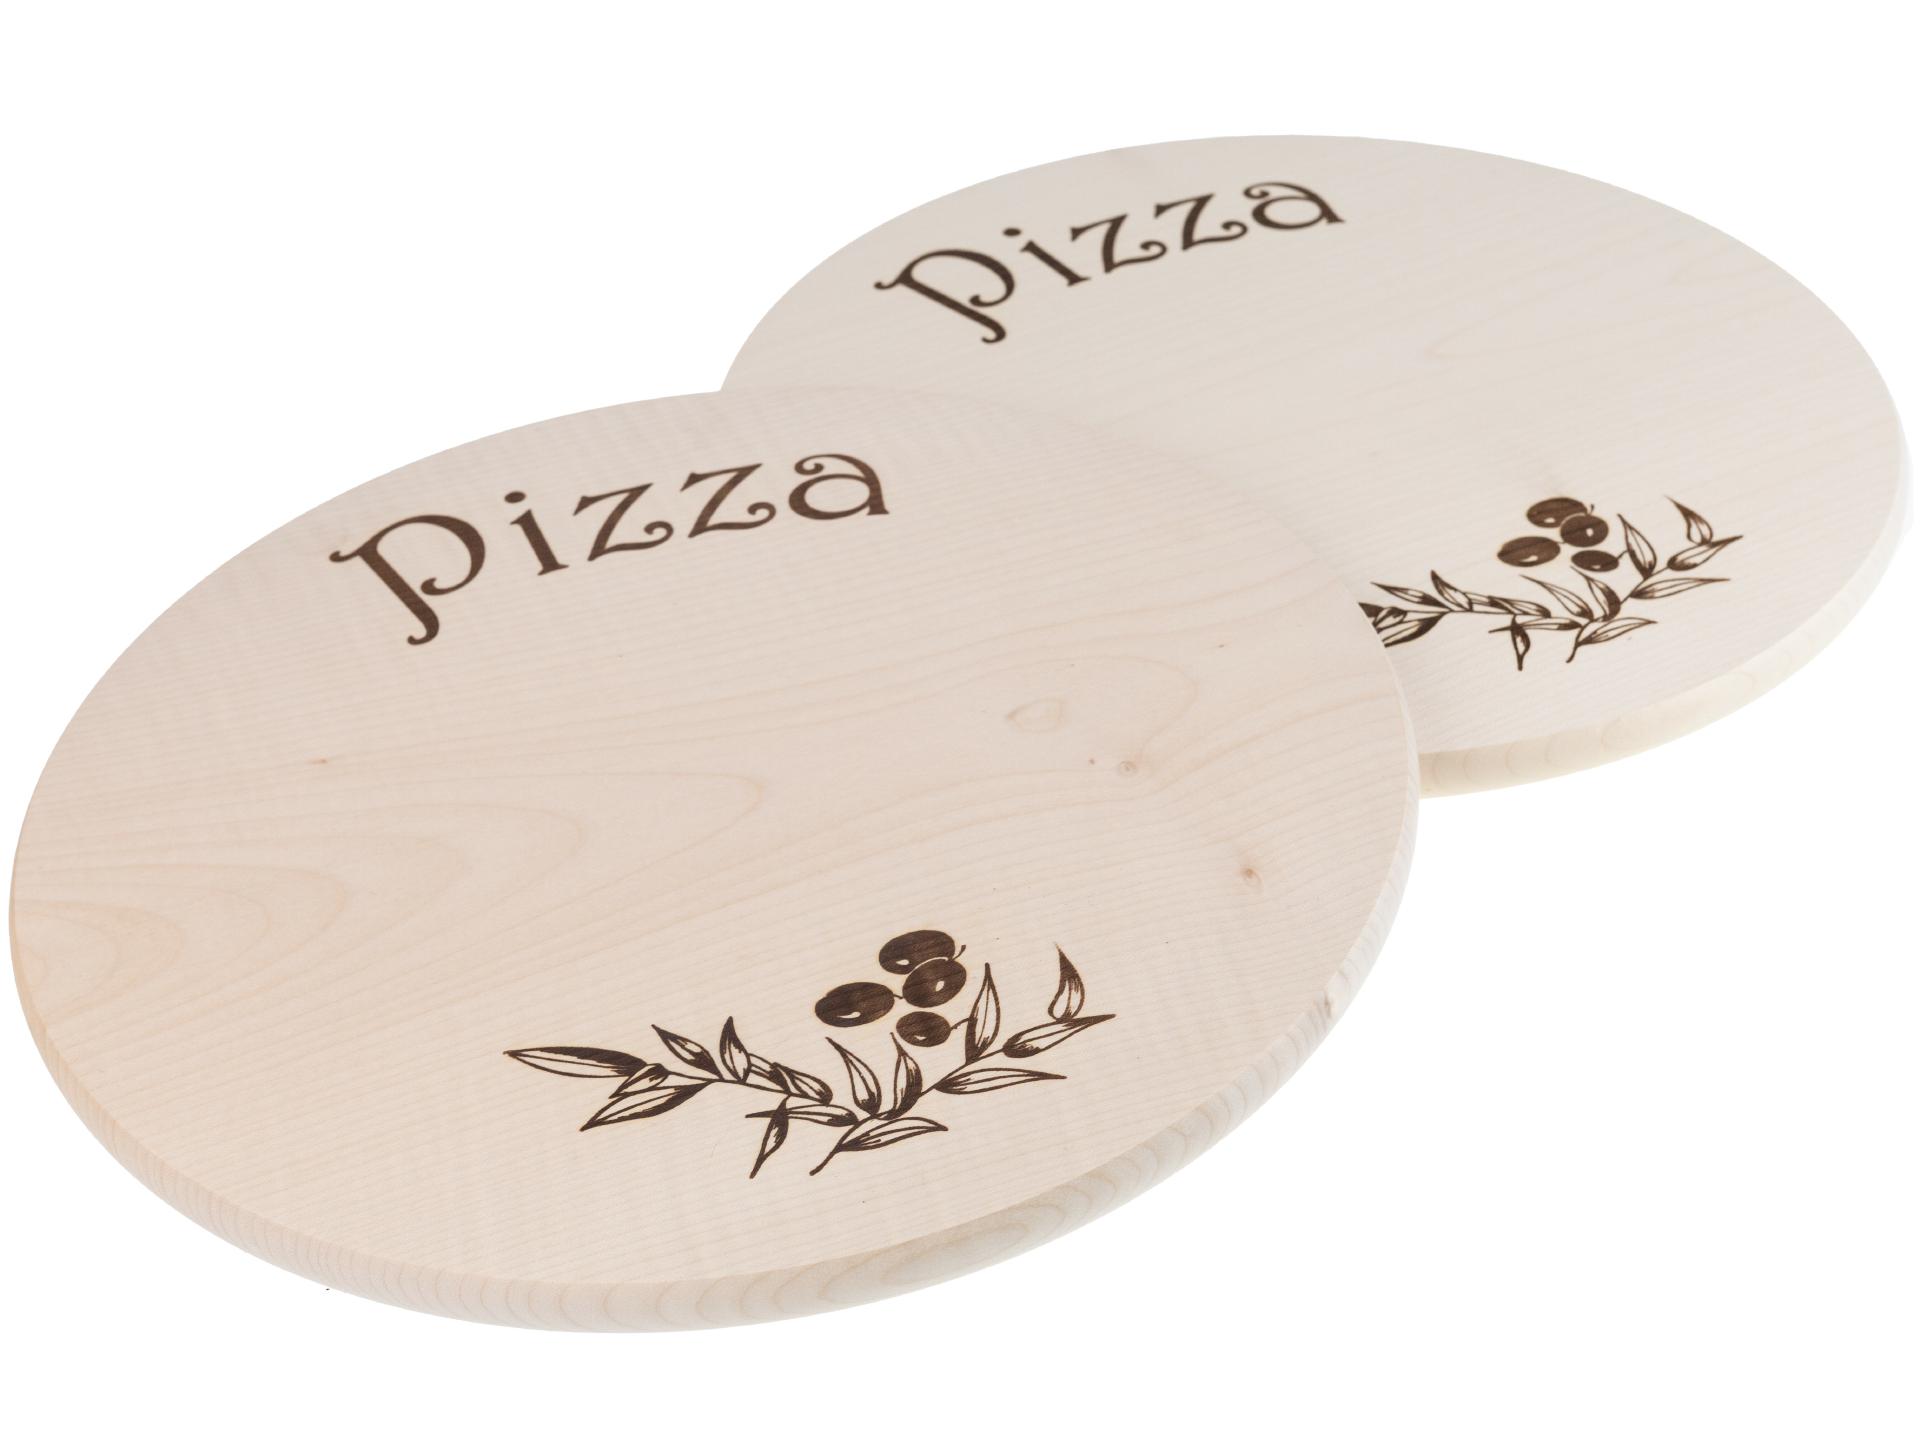 Pizzateller aus Ahorn Holz geölt 35 cm mit Pizza Branddruck